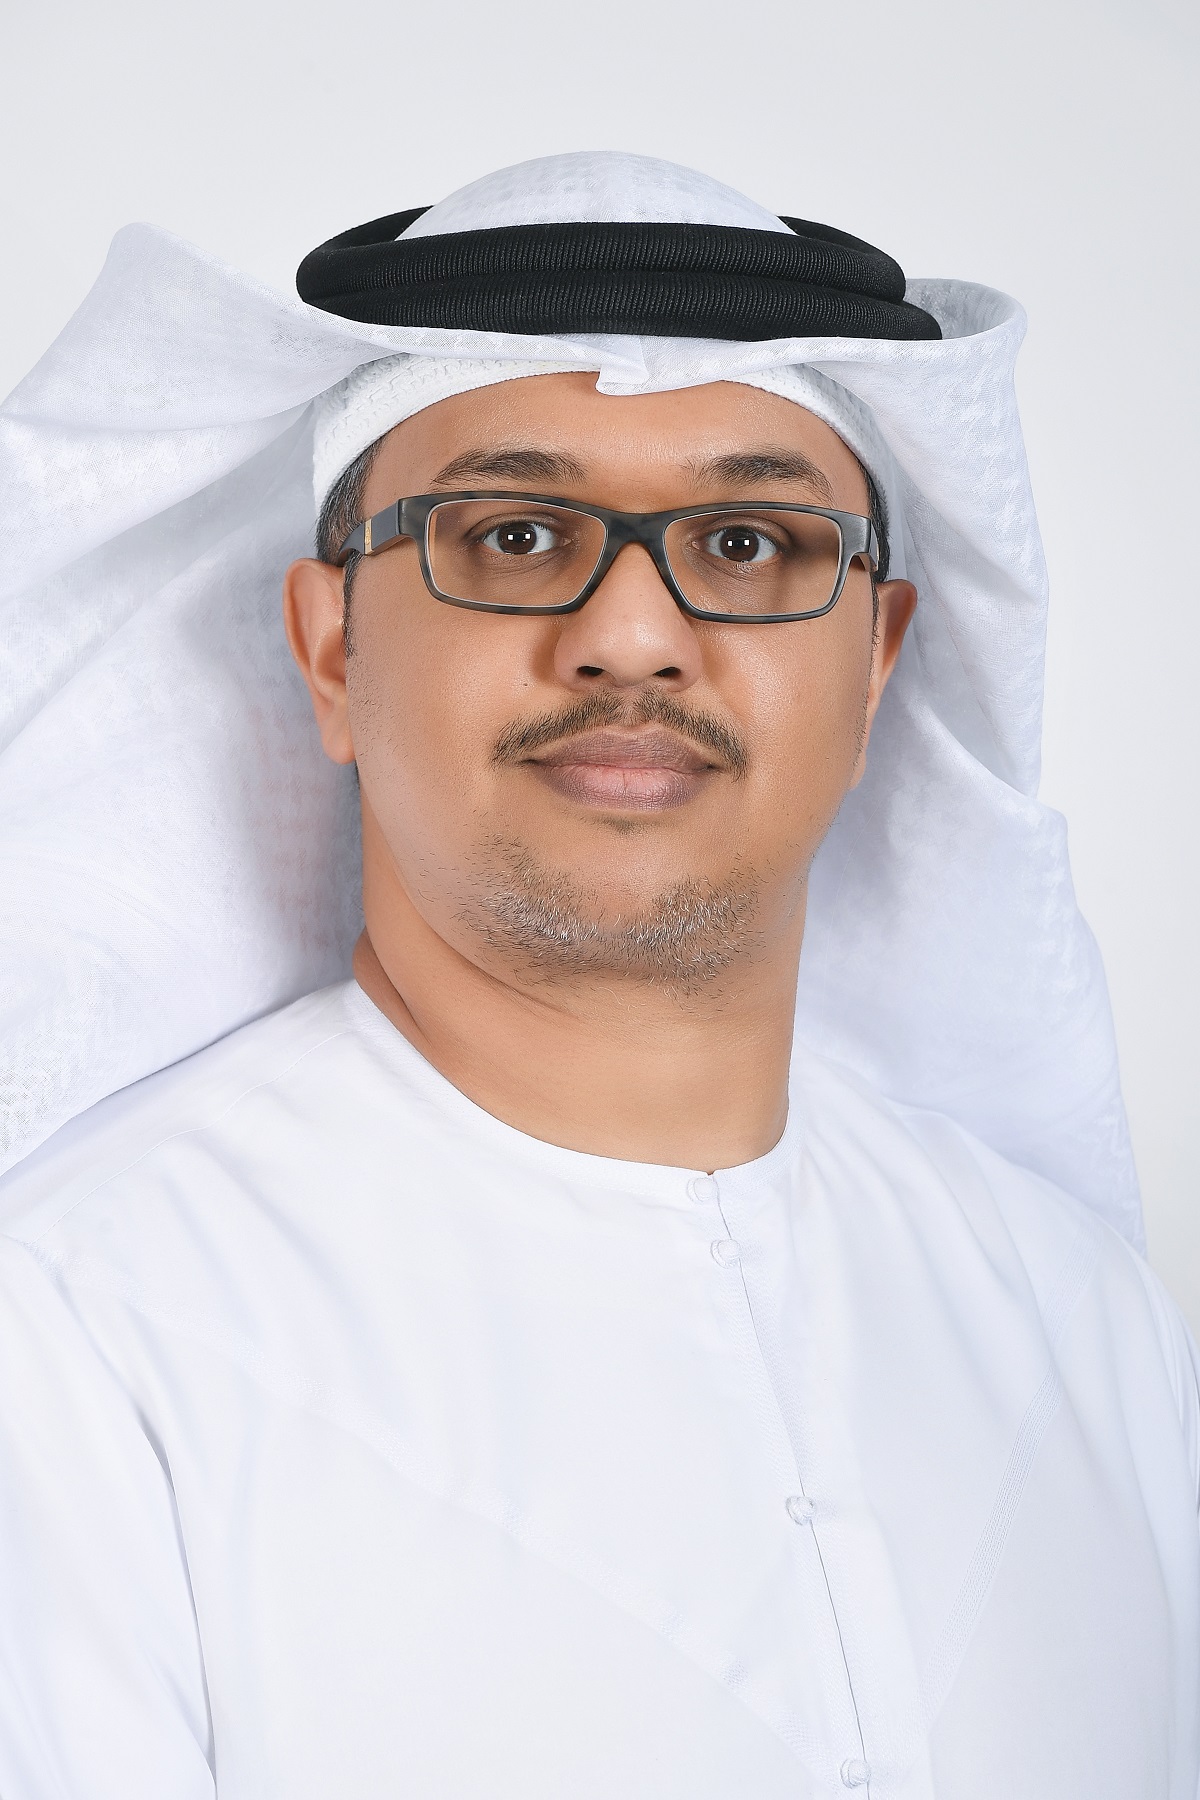 Dr. Waleed Salem Karama Alameri